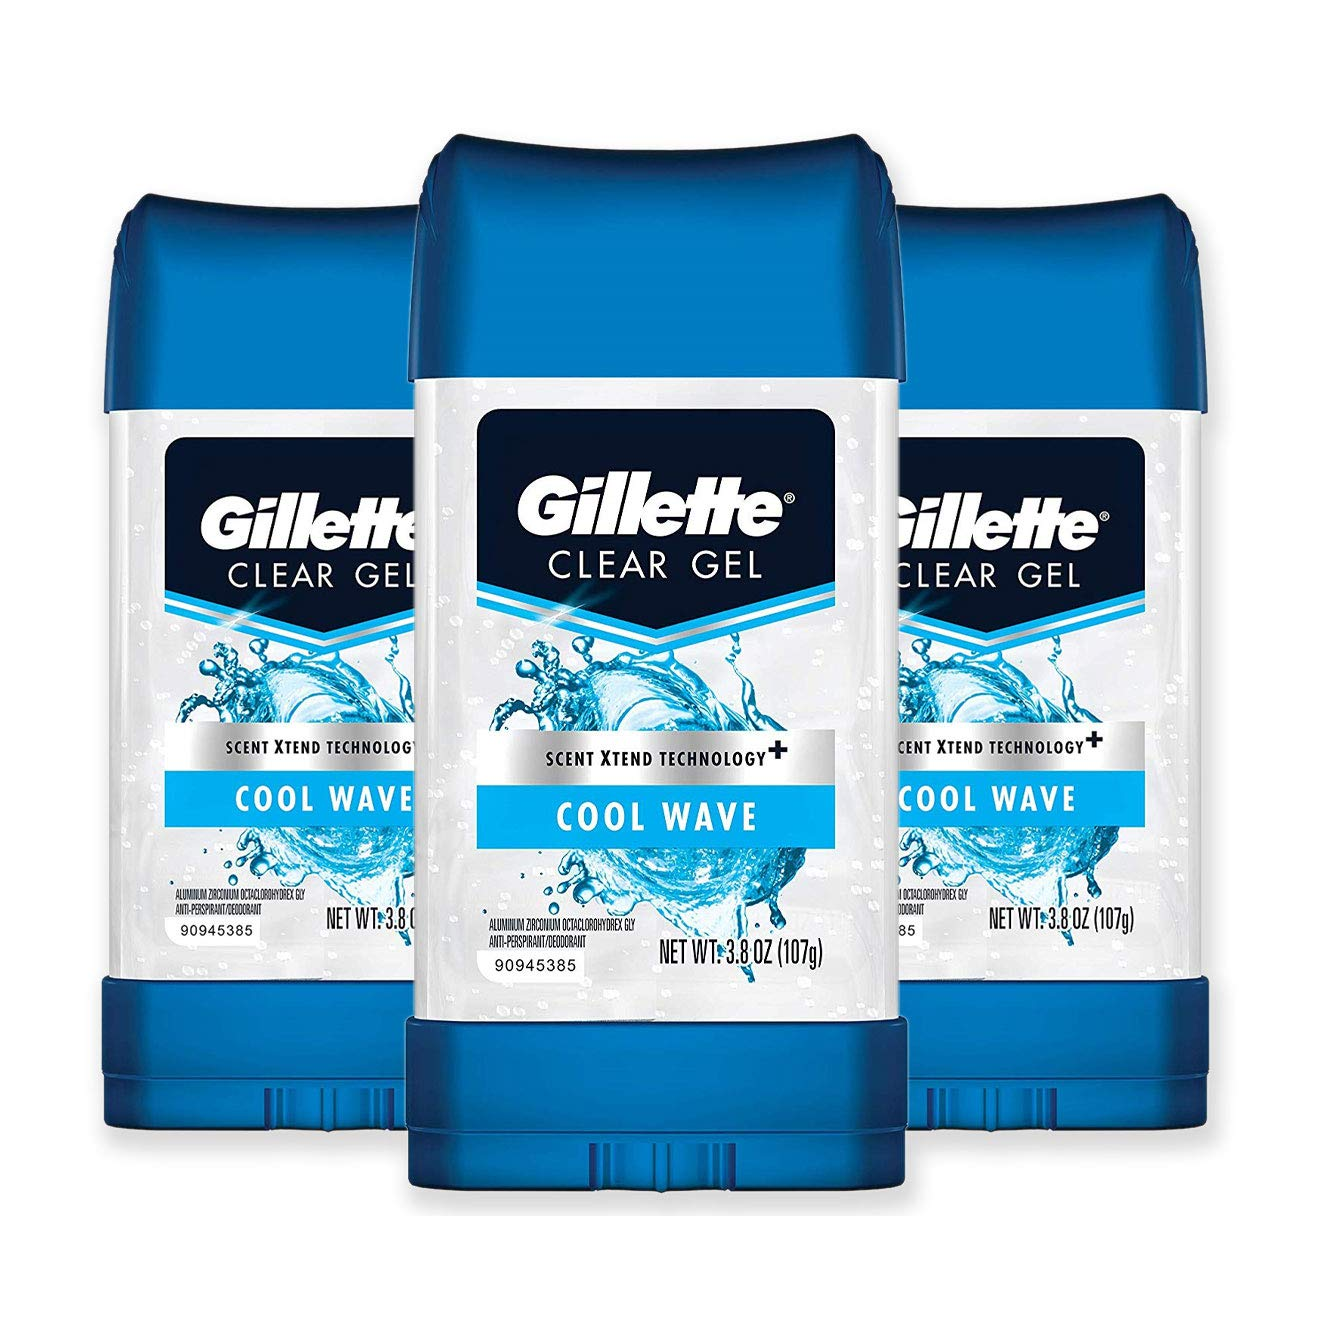 Gillette Antiperspirant Deodorant for Men (Cool Wave Scent) 3 Pack Only $6.72 Shipped!